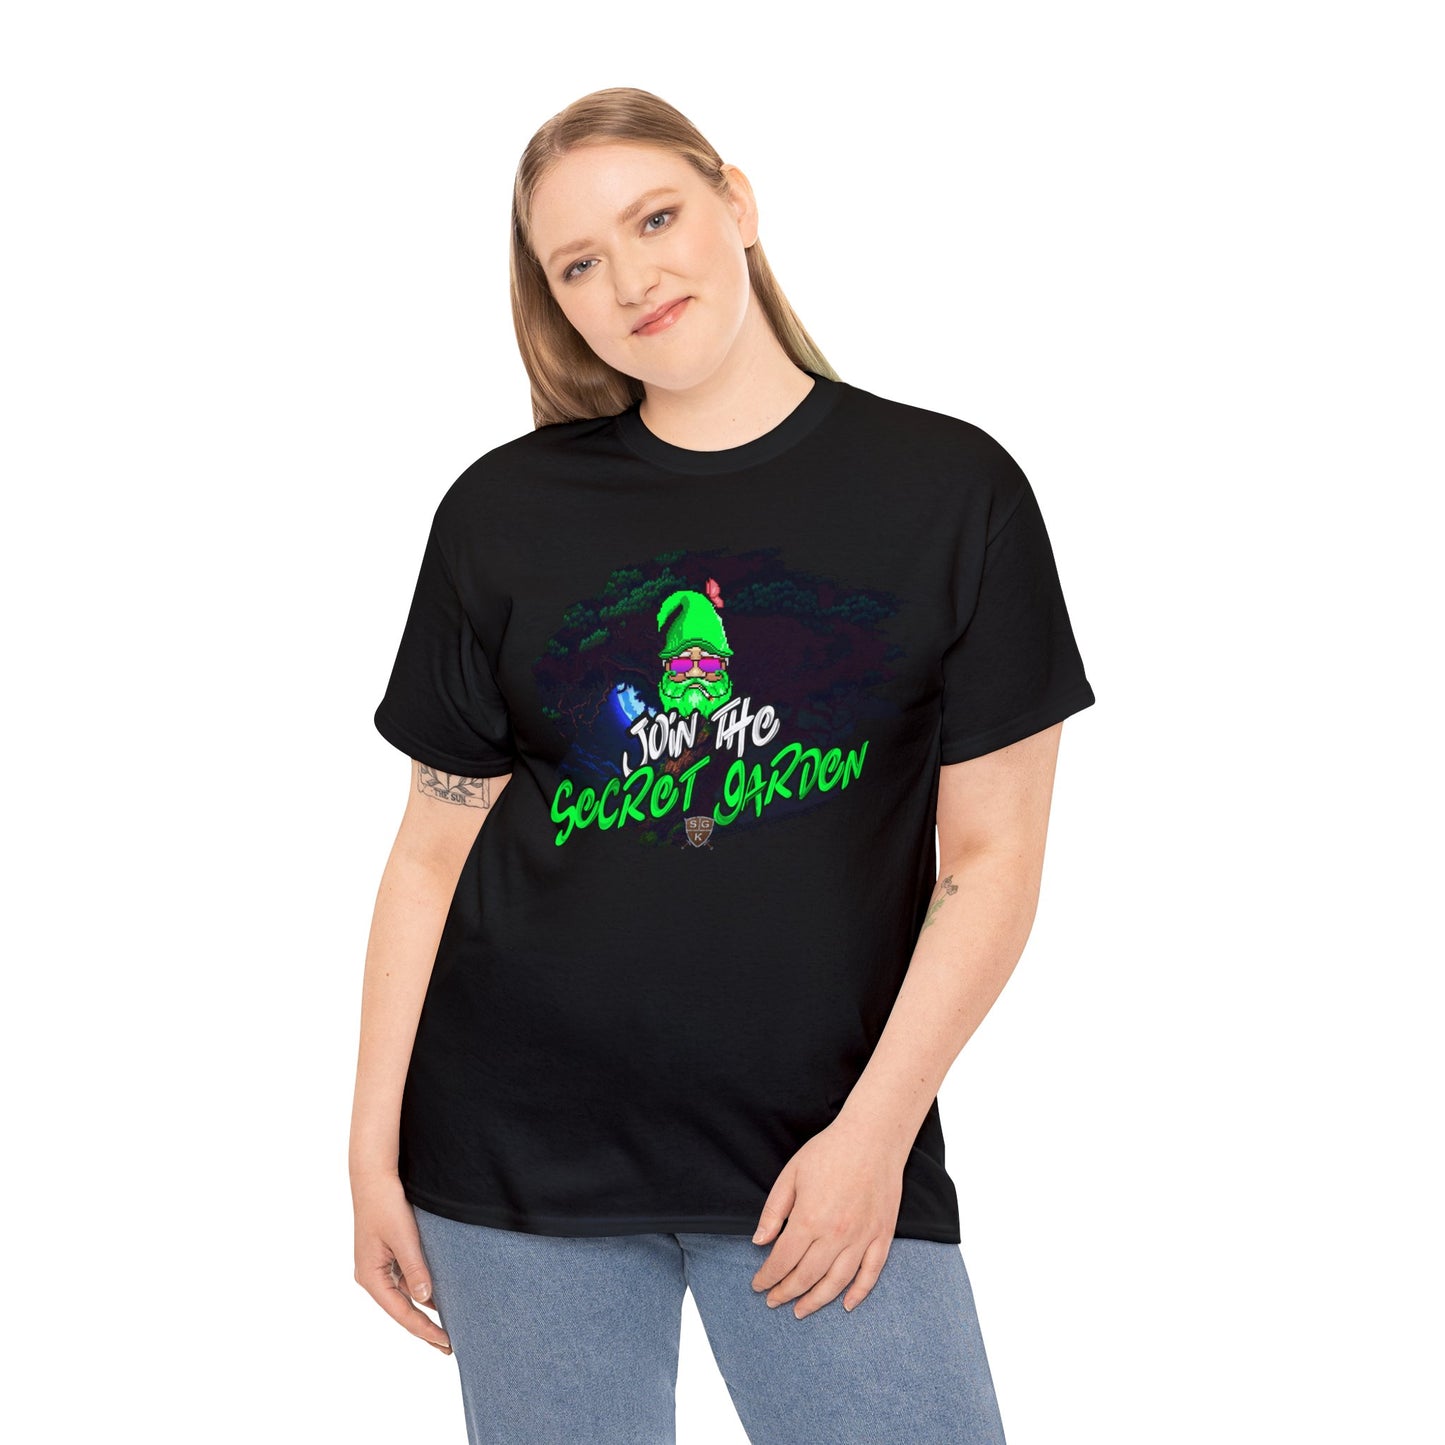 SGK Únete a la camiseta de algodón pesado unisex Secret Garden